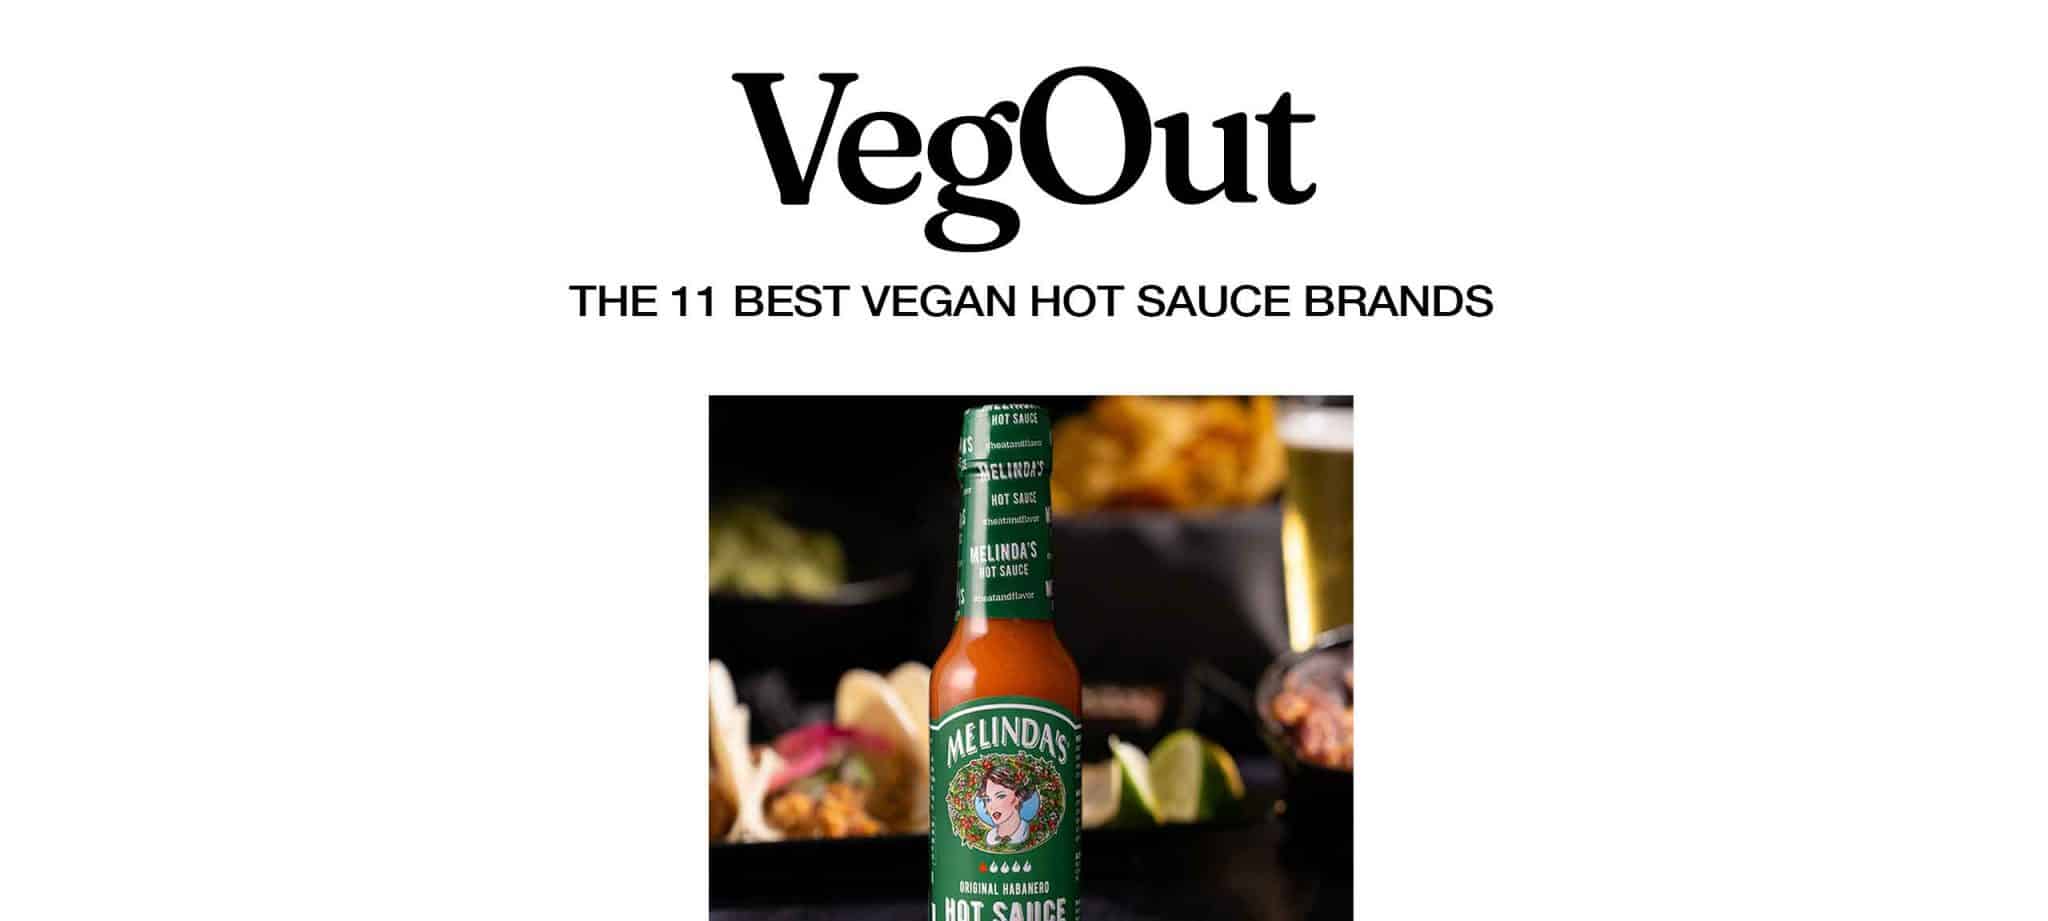 The 11 Best Vegan Hot Sauce Brands | Says VegOut